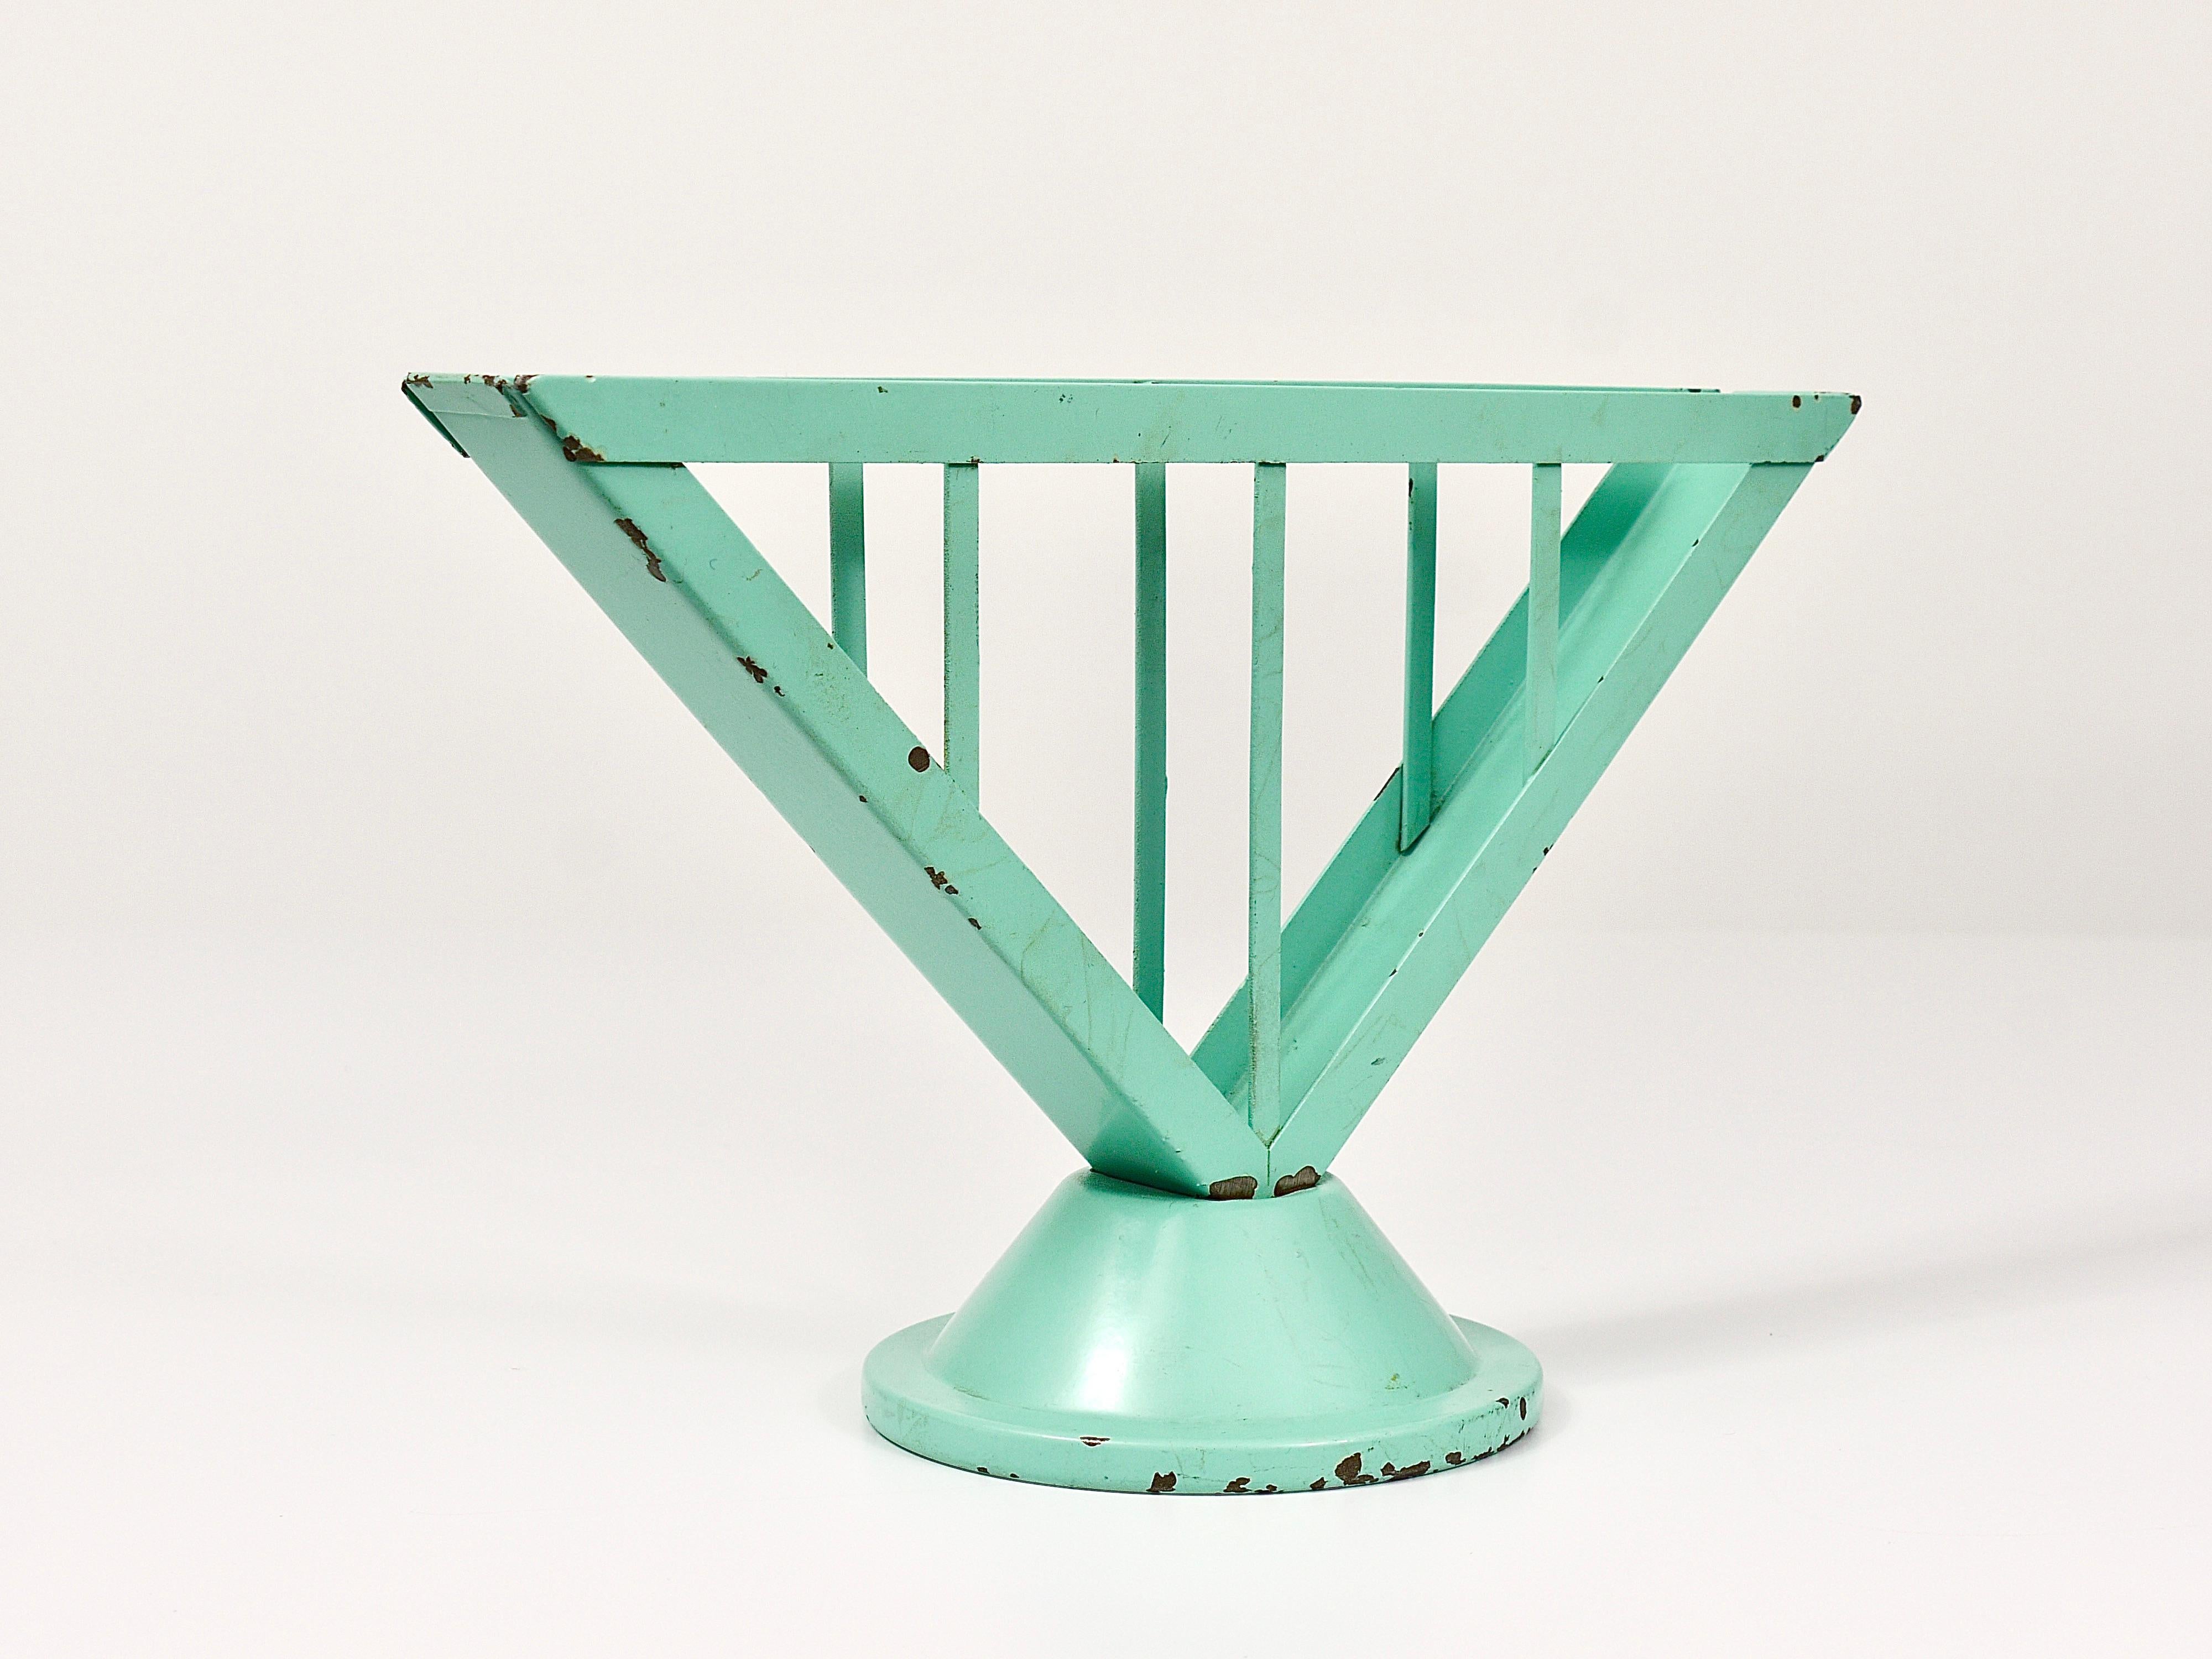 Decorative Green Marianne Brandt Avantgarde Bauhaus Napkin Holder, Ruppel, 1930s For Sale 4